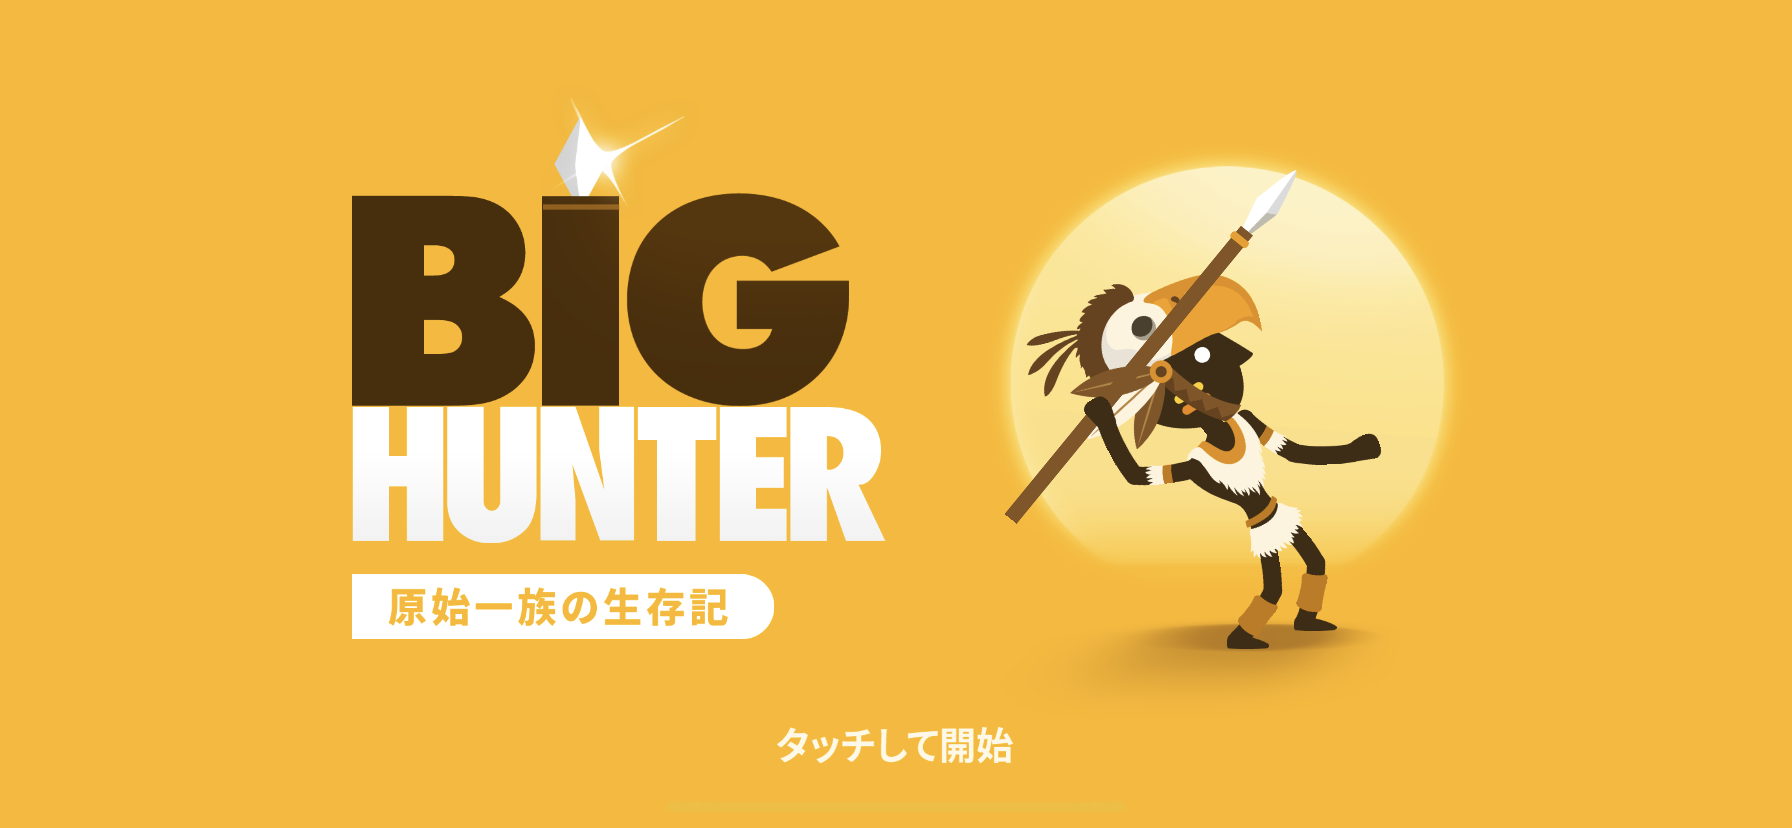 【Big Hunter】オープニング画面